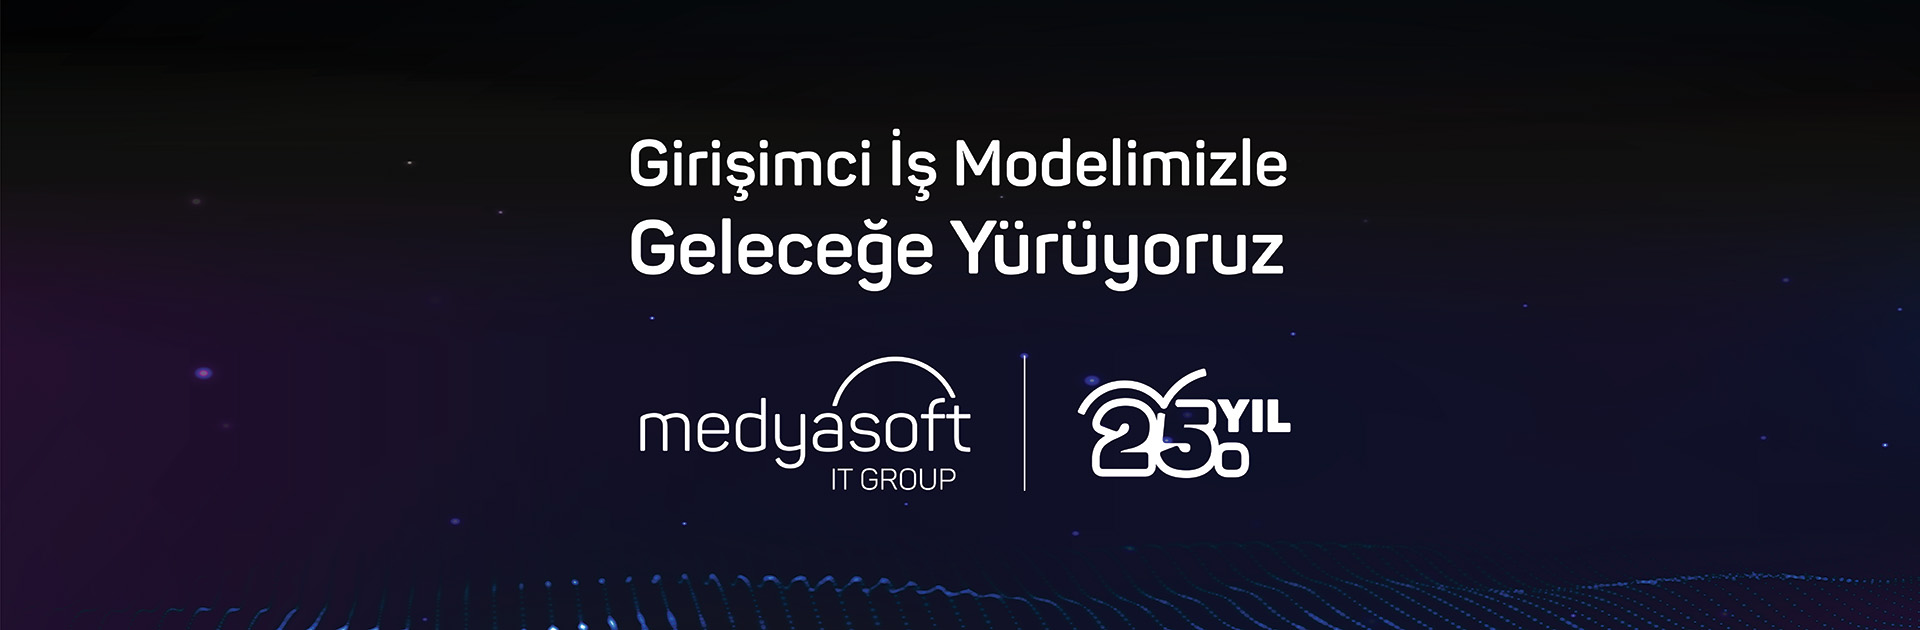 Medyasoft IT Group Celebrating its 25th Anniversary